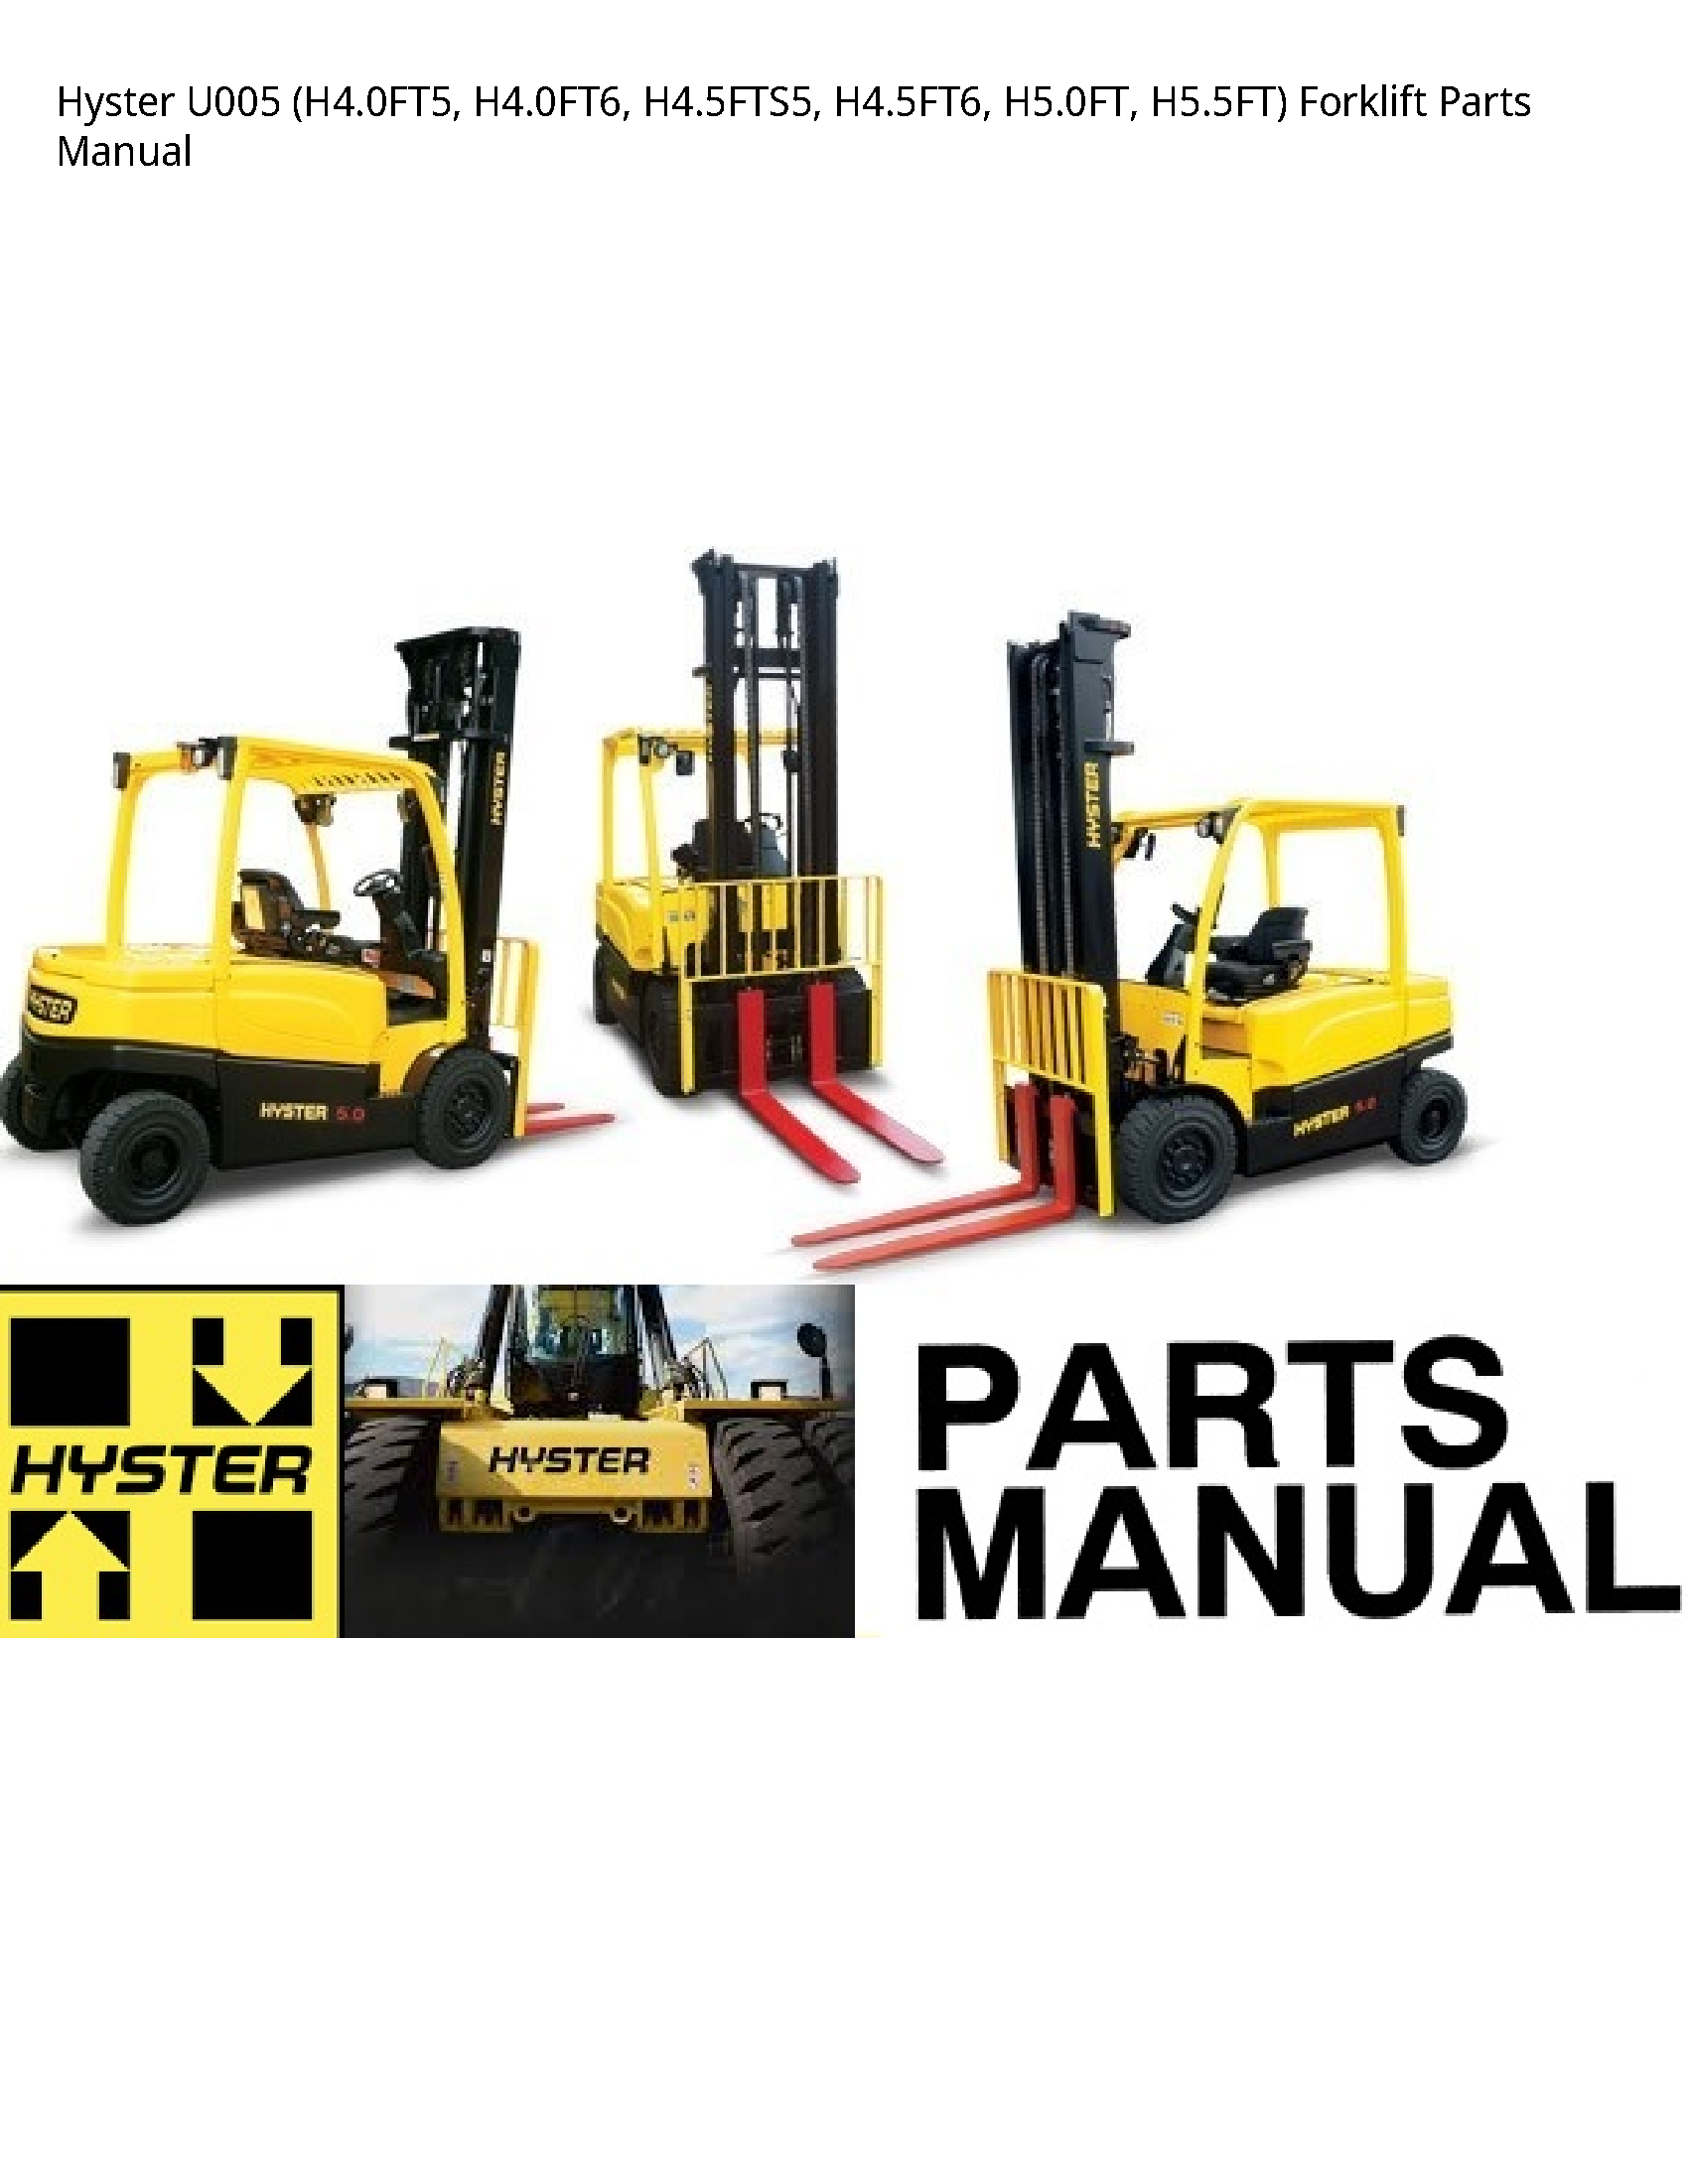 Hyster U005 Forklift Parts manual